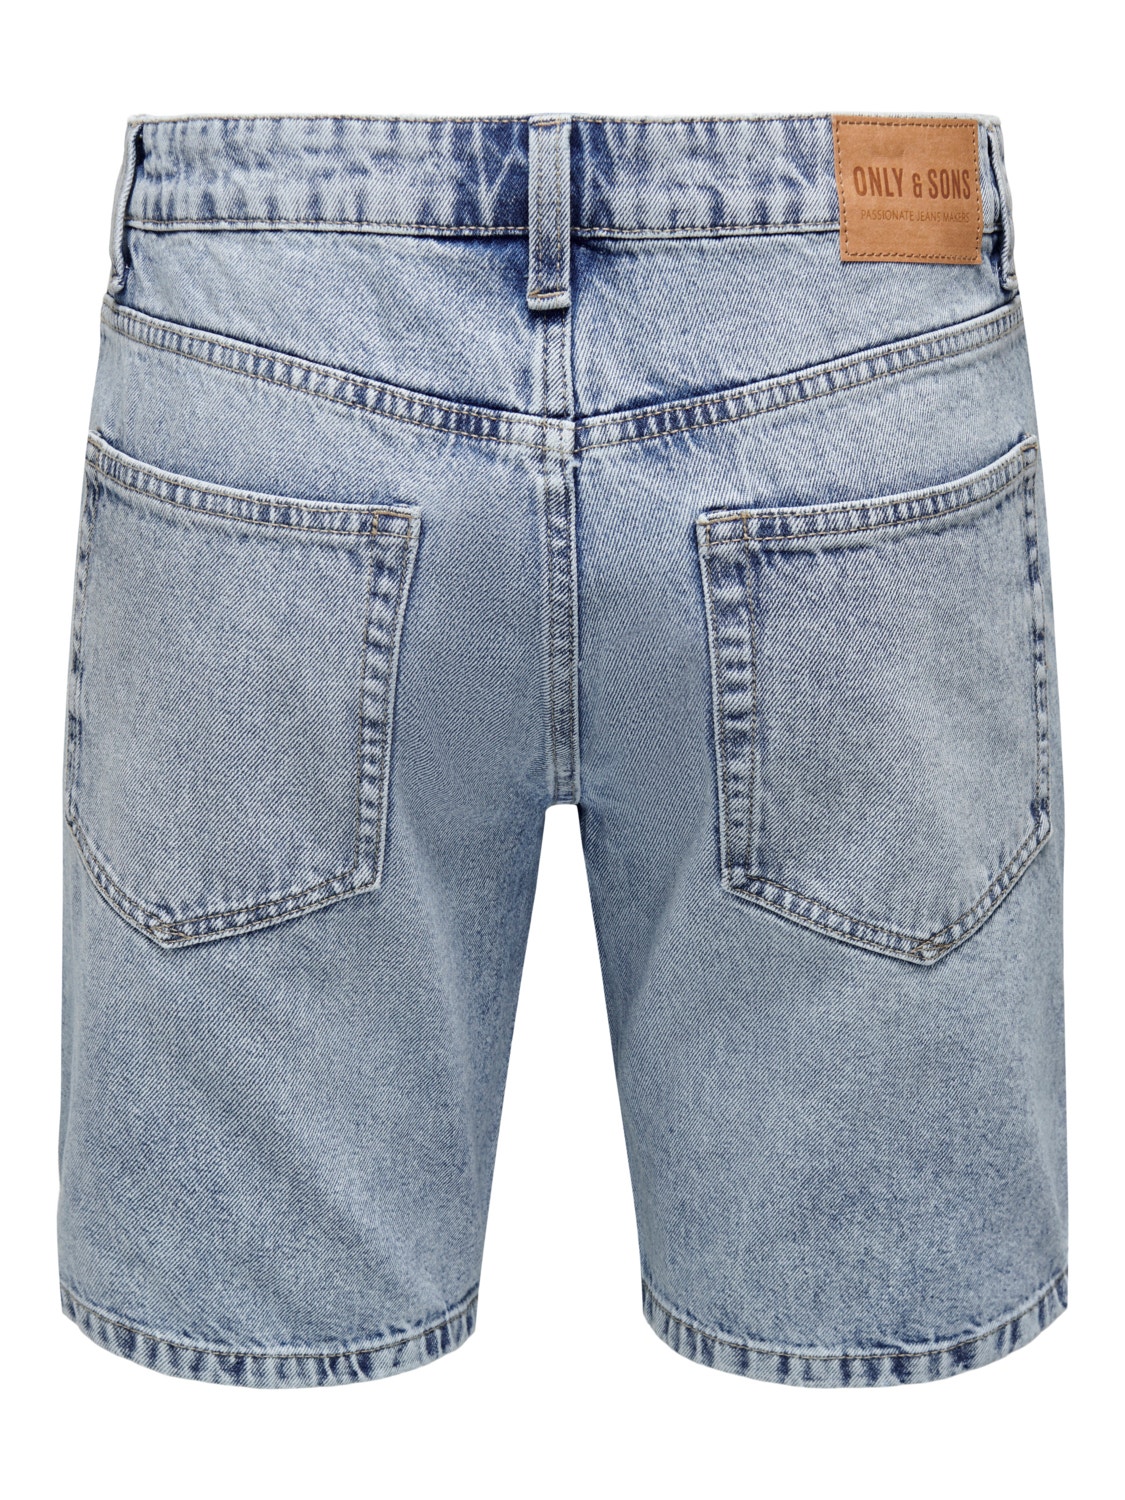 ONLY & SONS Loose Fit Regular rise Shorts -Light Blue Denim - 22024846